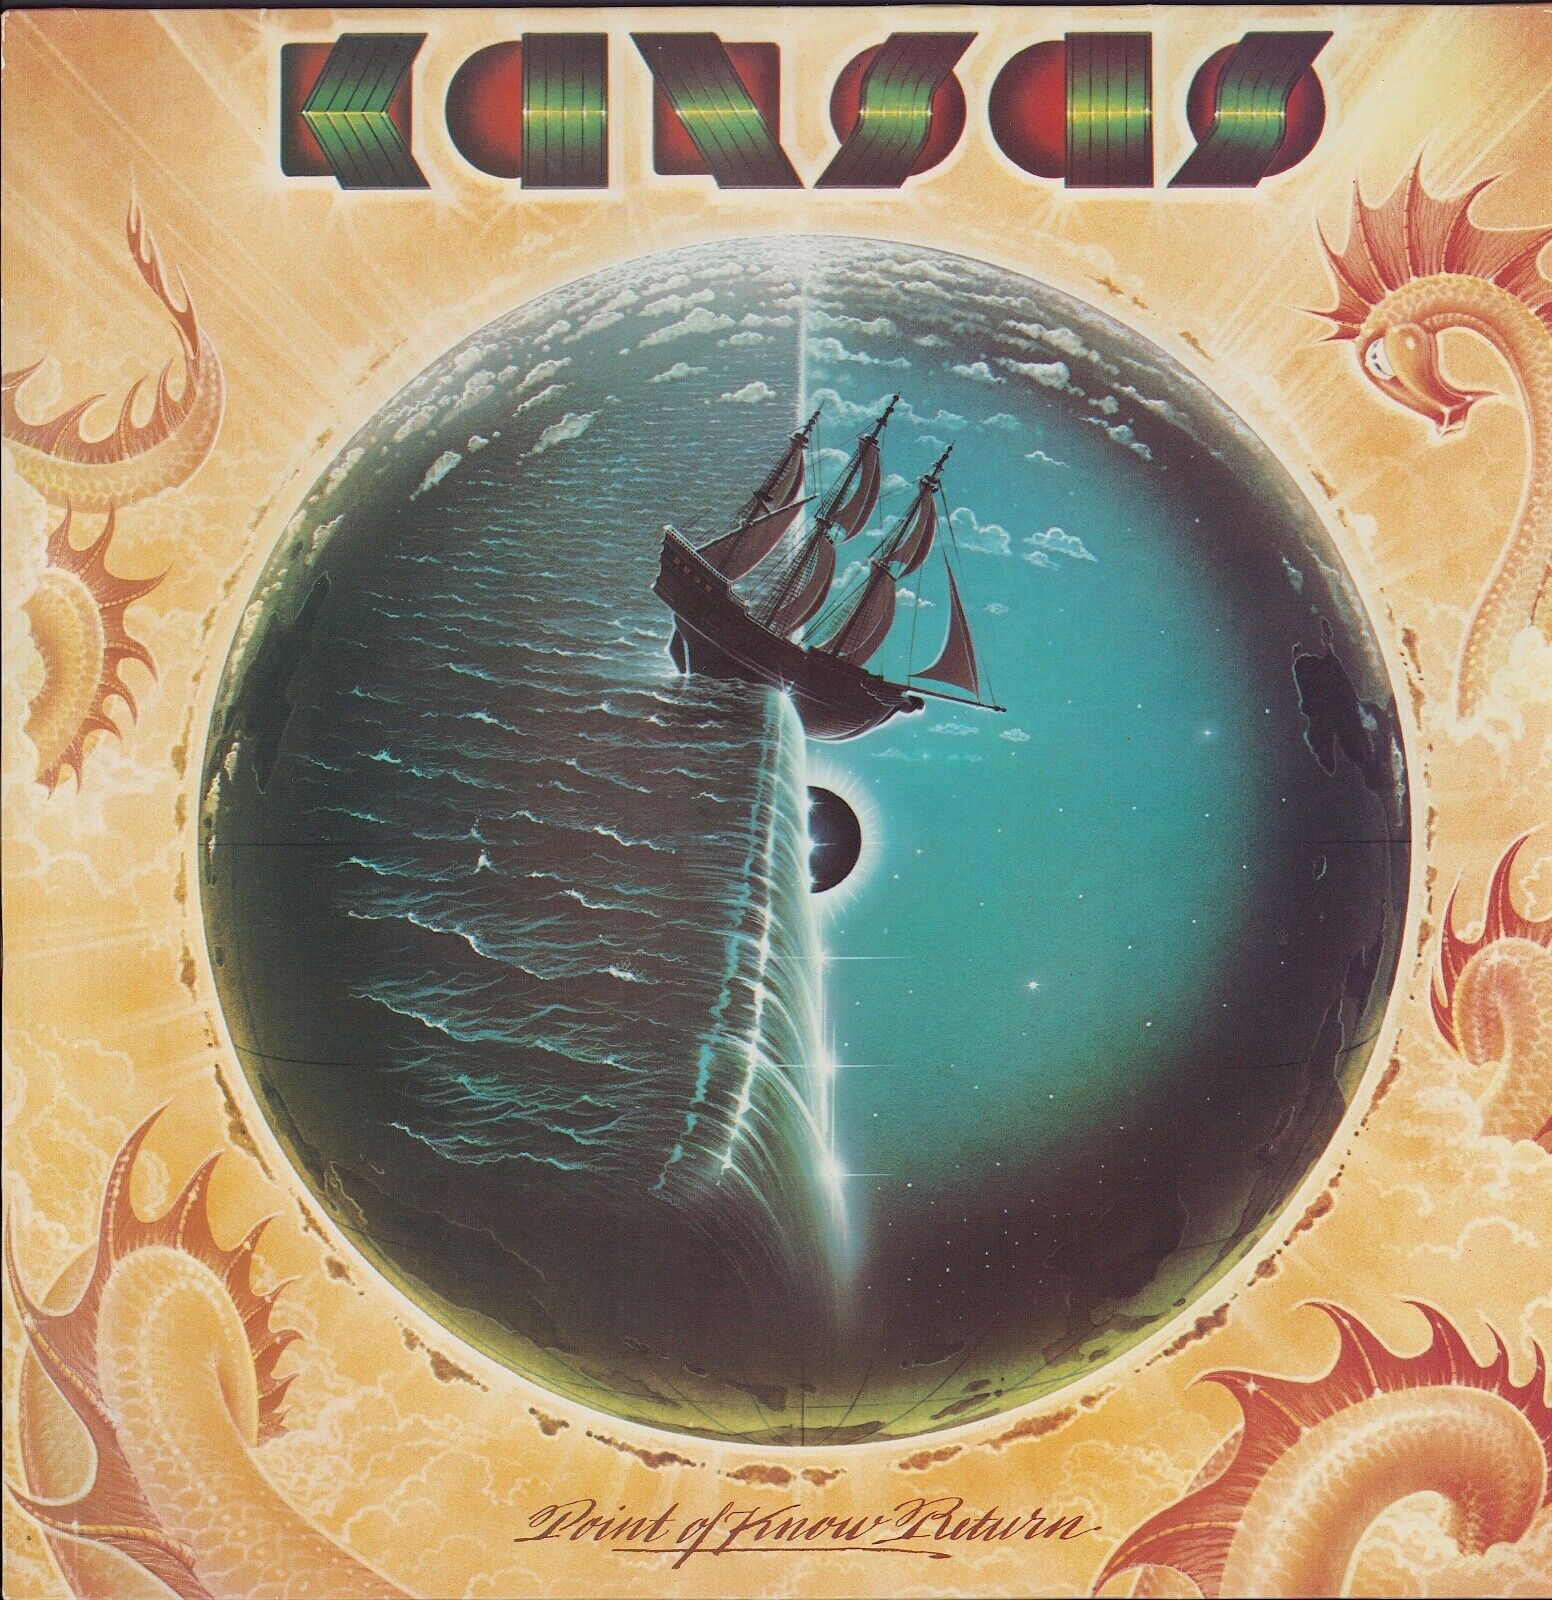 Kansas - Point Of Know Return Vinyl LP